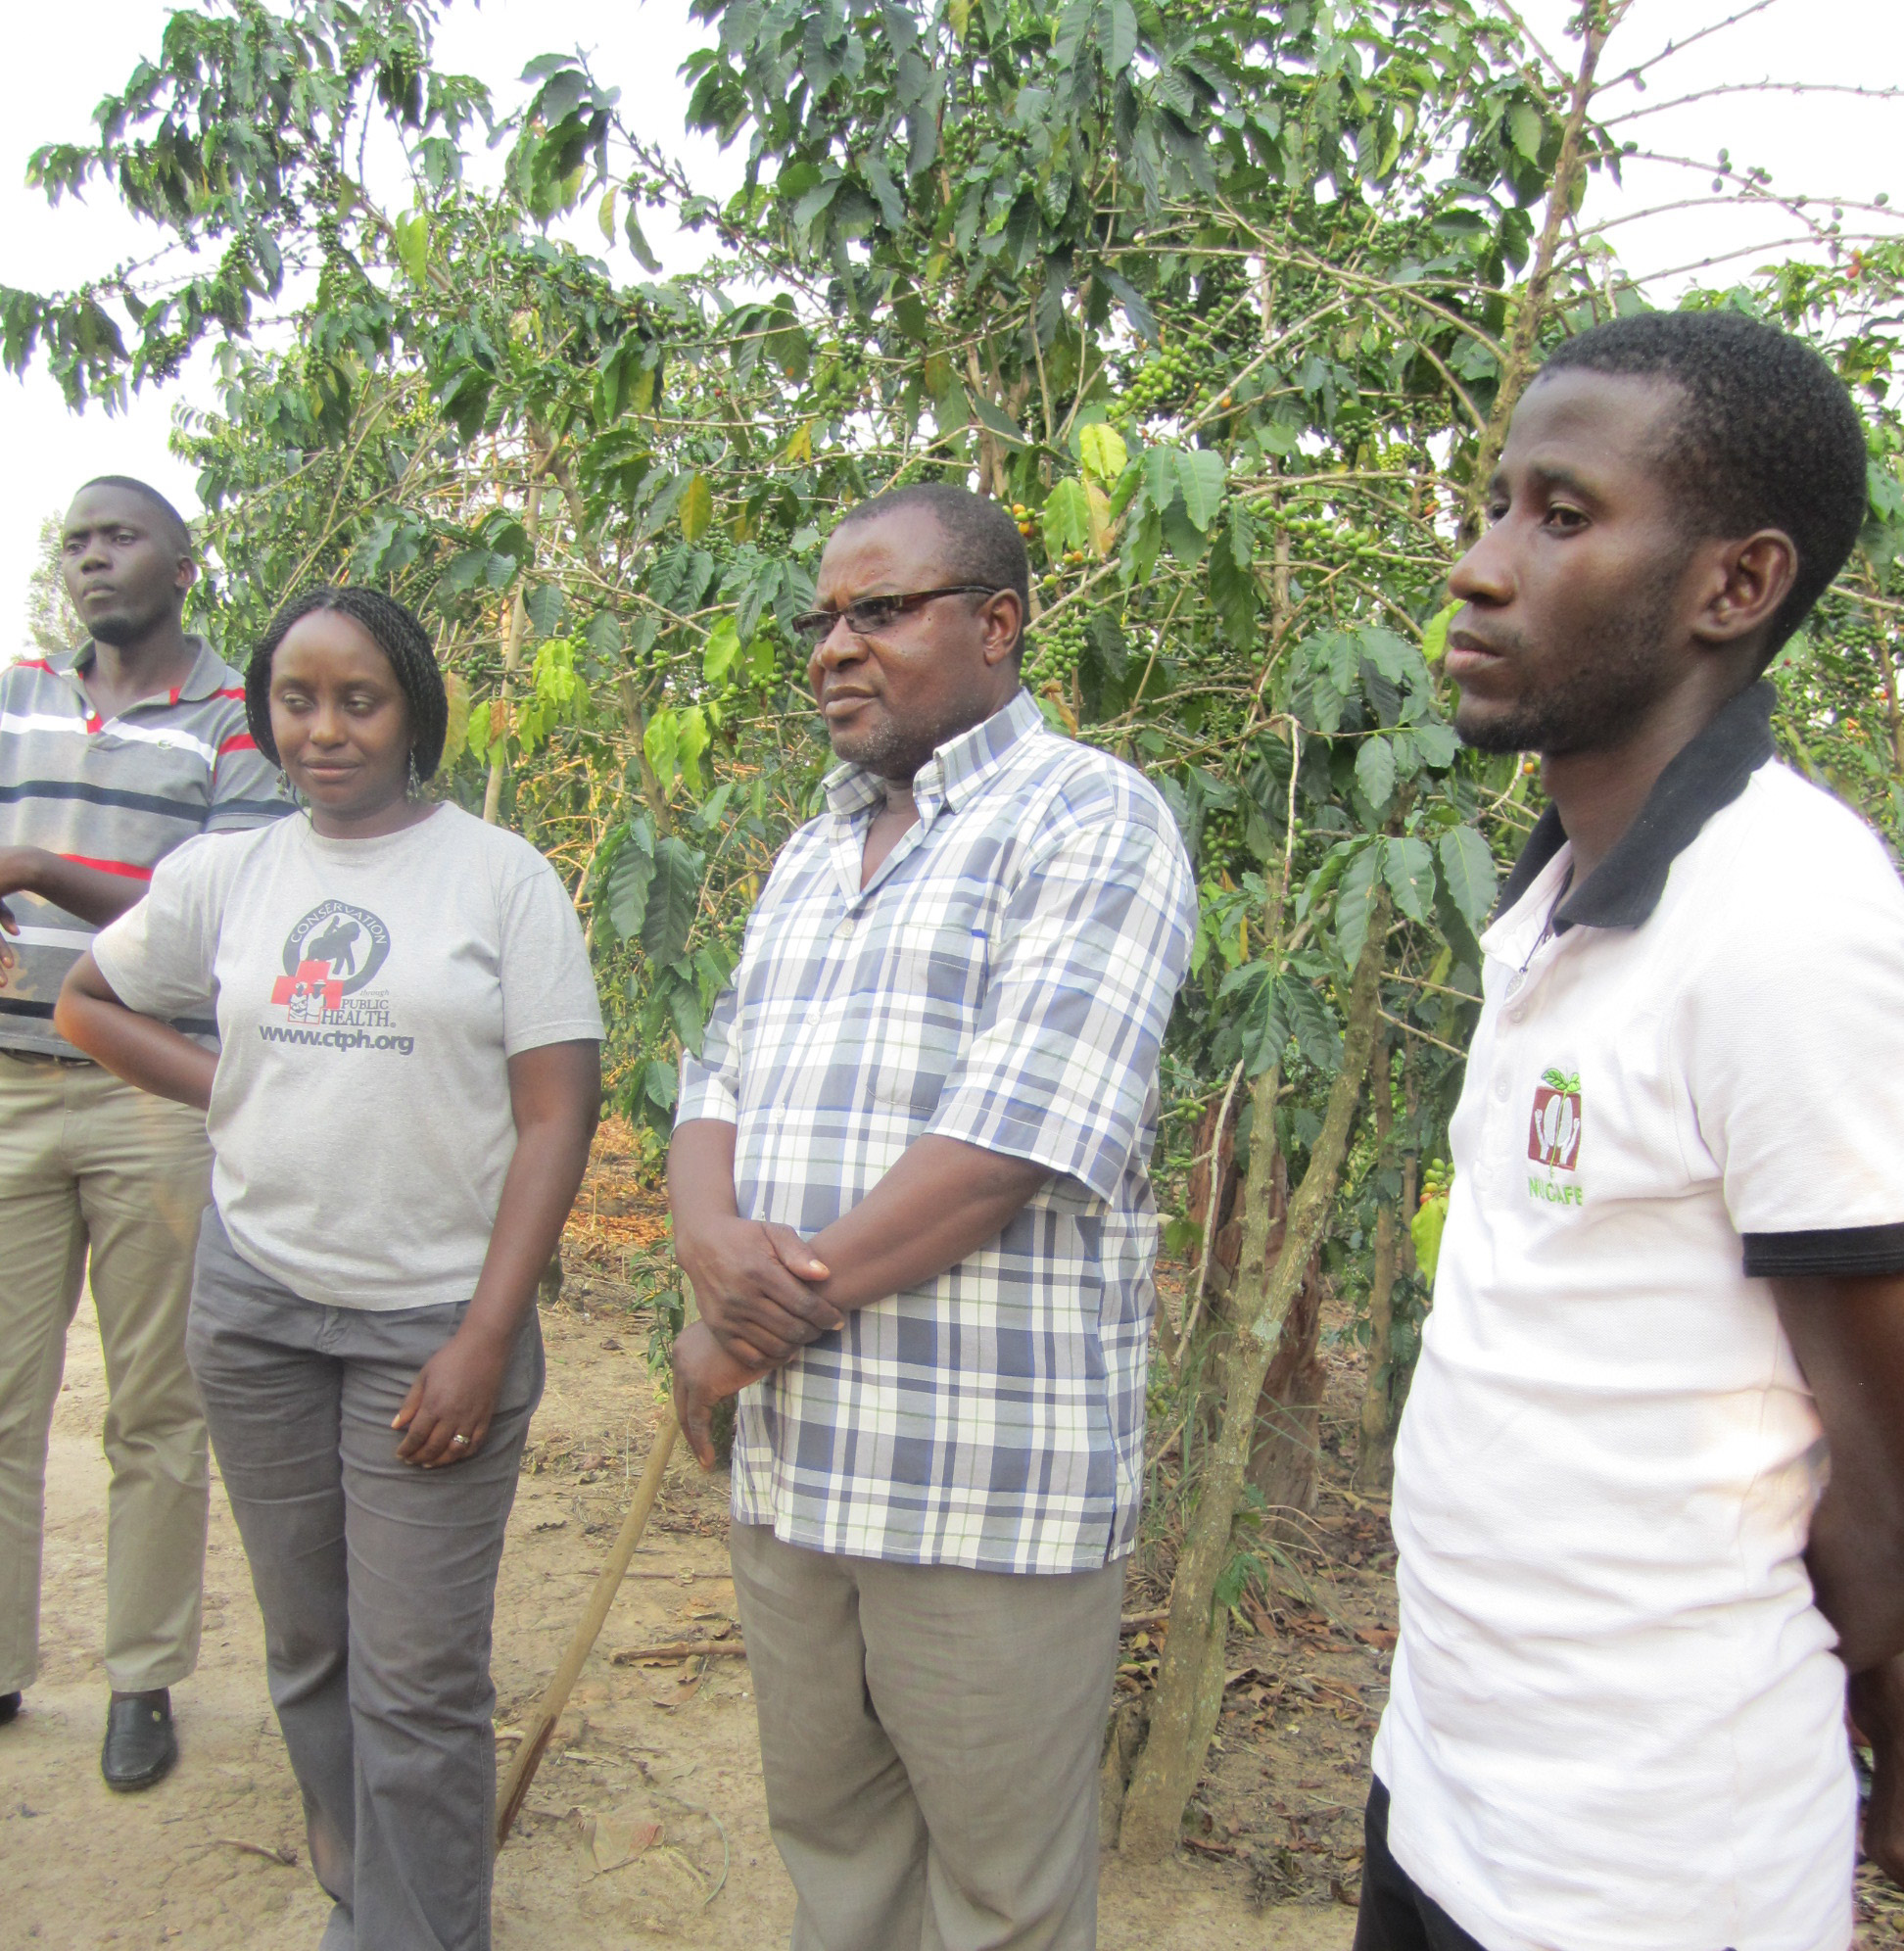 Gorilla Conservation Coffee team farmer training